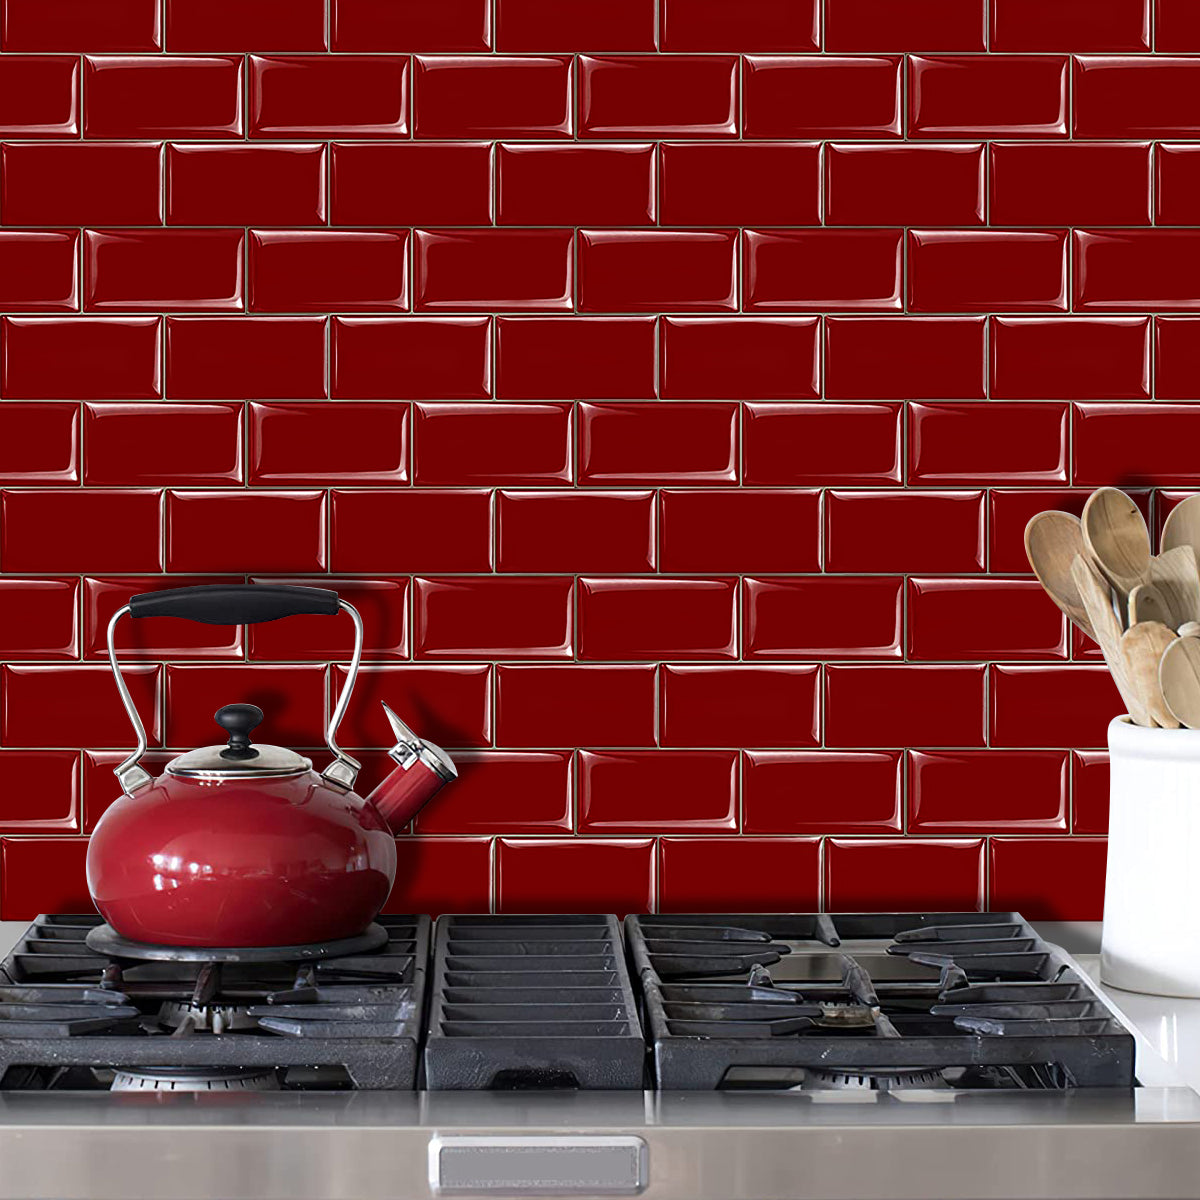 10-Sheet Mosaic Tiles Peel and Stick Backsplash Kitchen  2.5mm Thicker Design - Rose Red